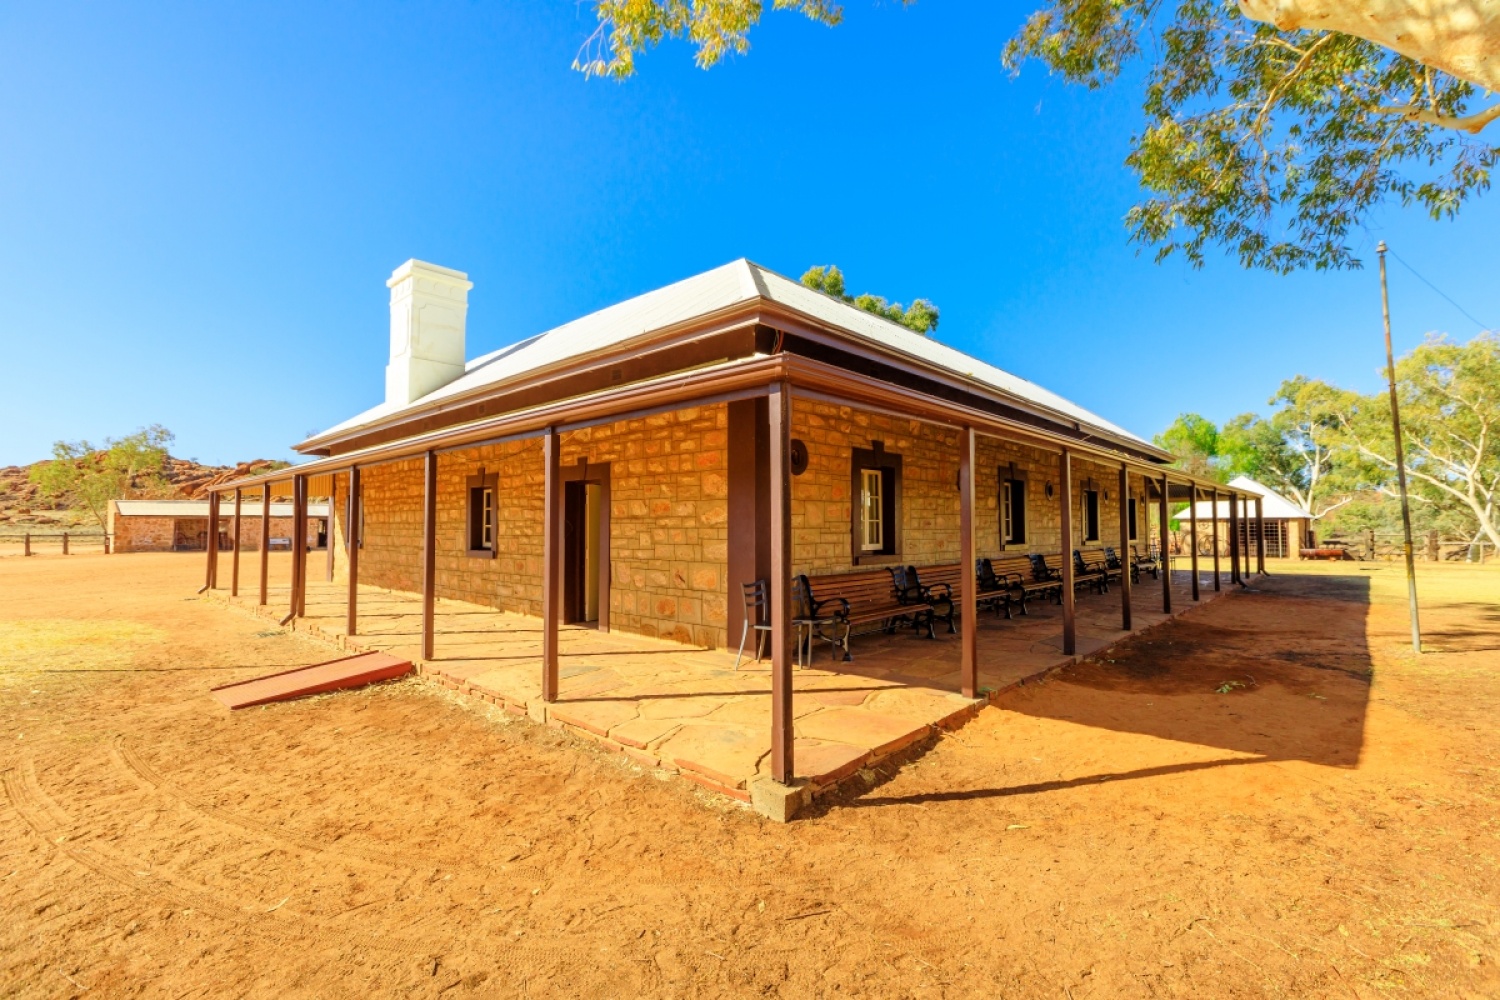 Alice Springs, Northern Territory